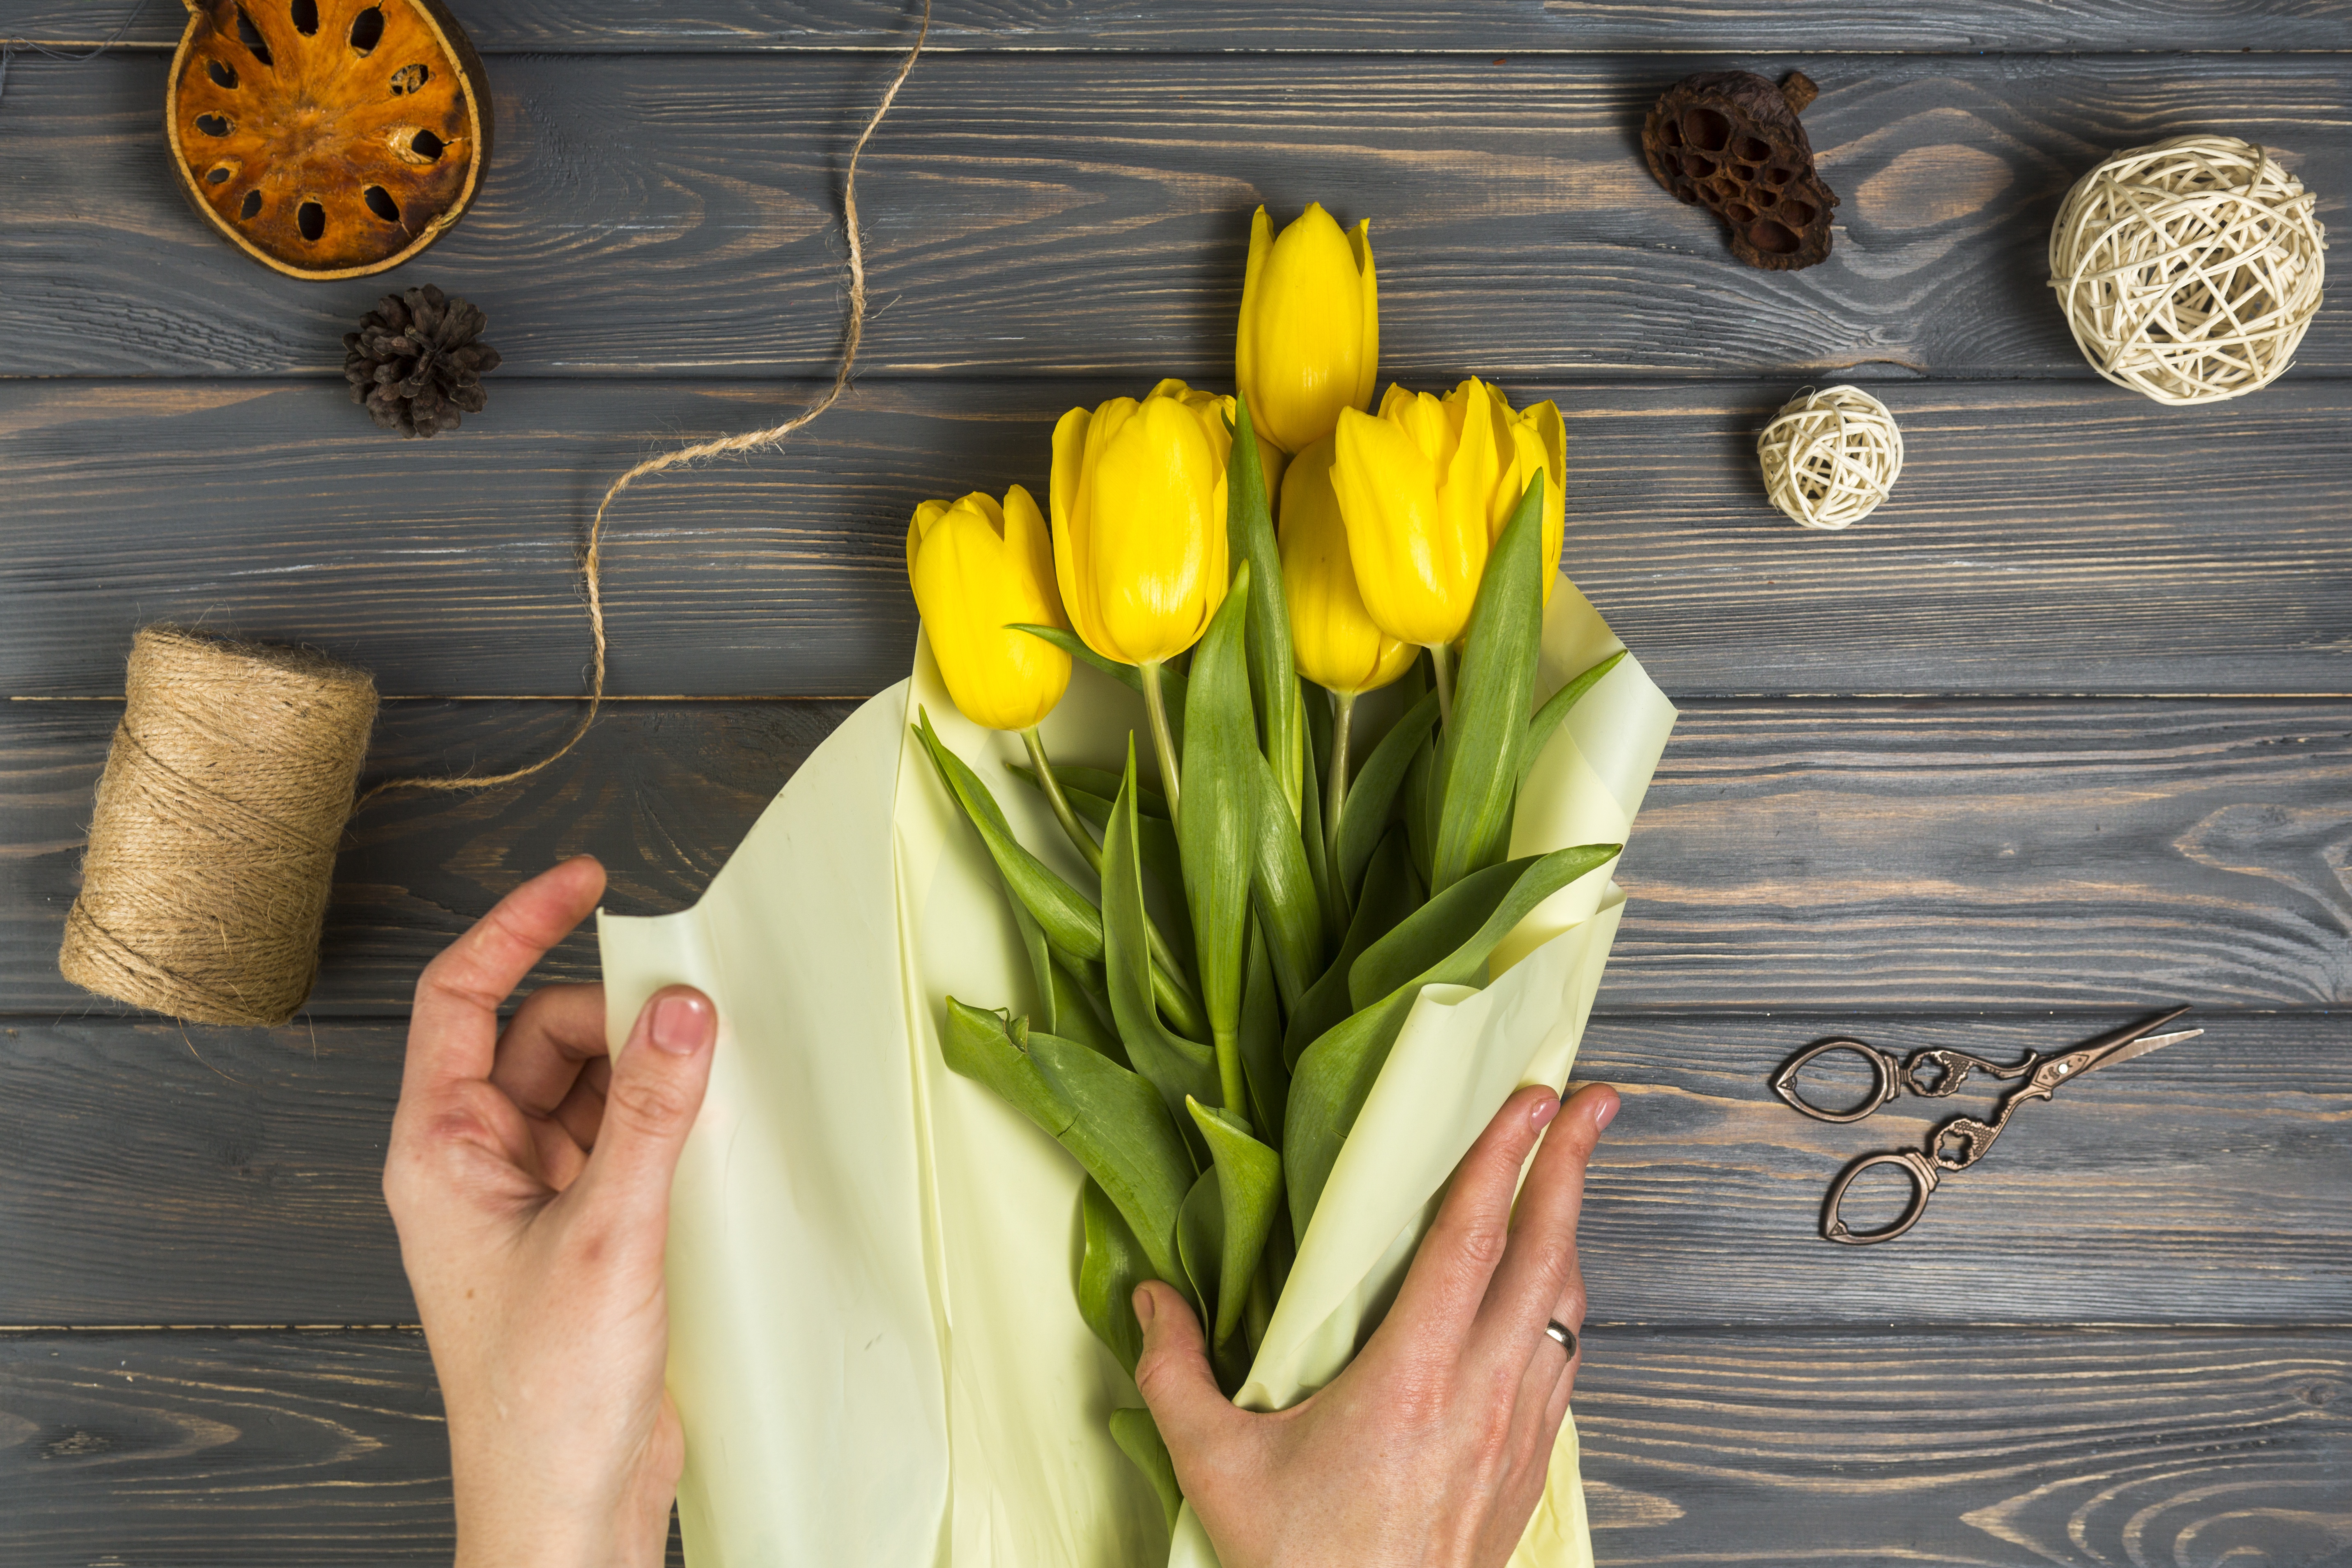 Желтые тюльпаны к чему дарят женщине